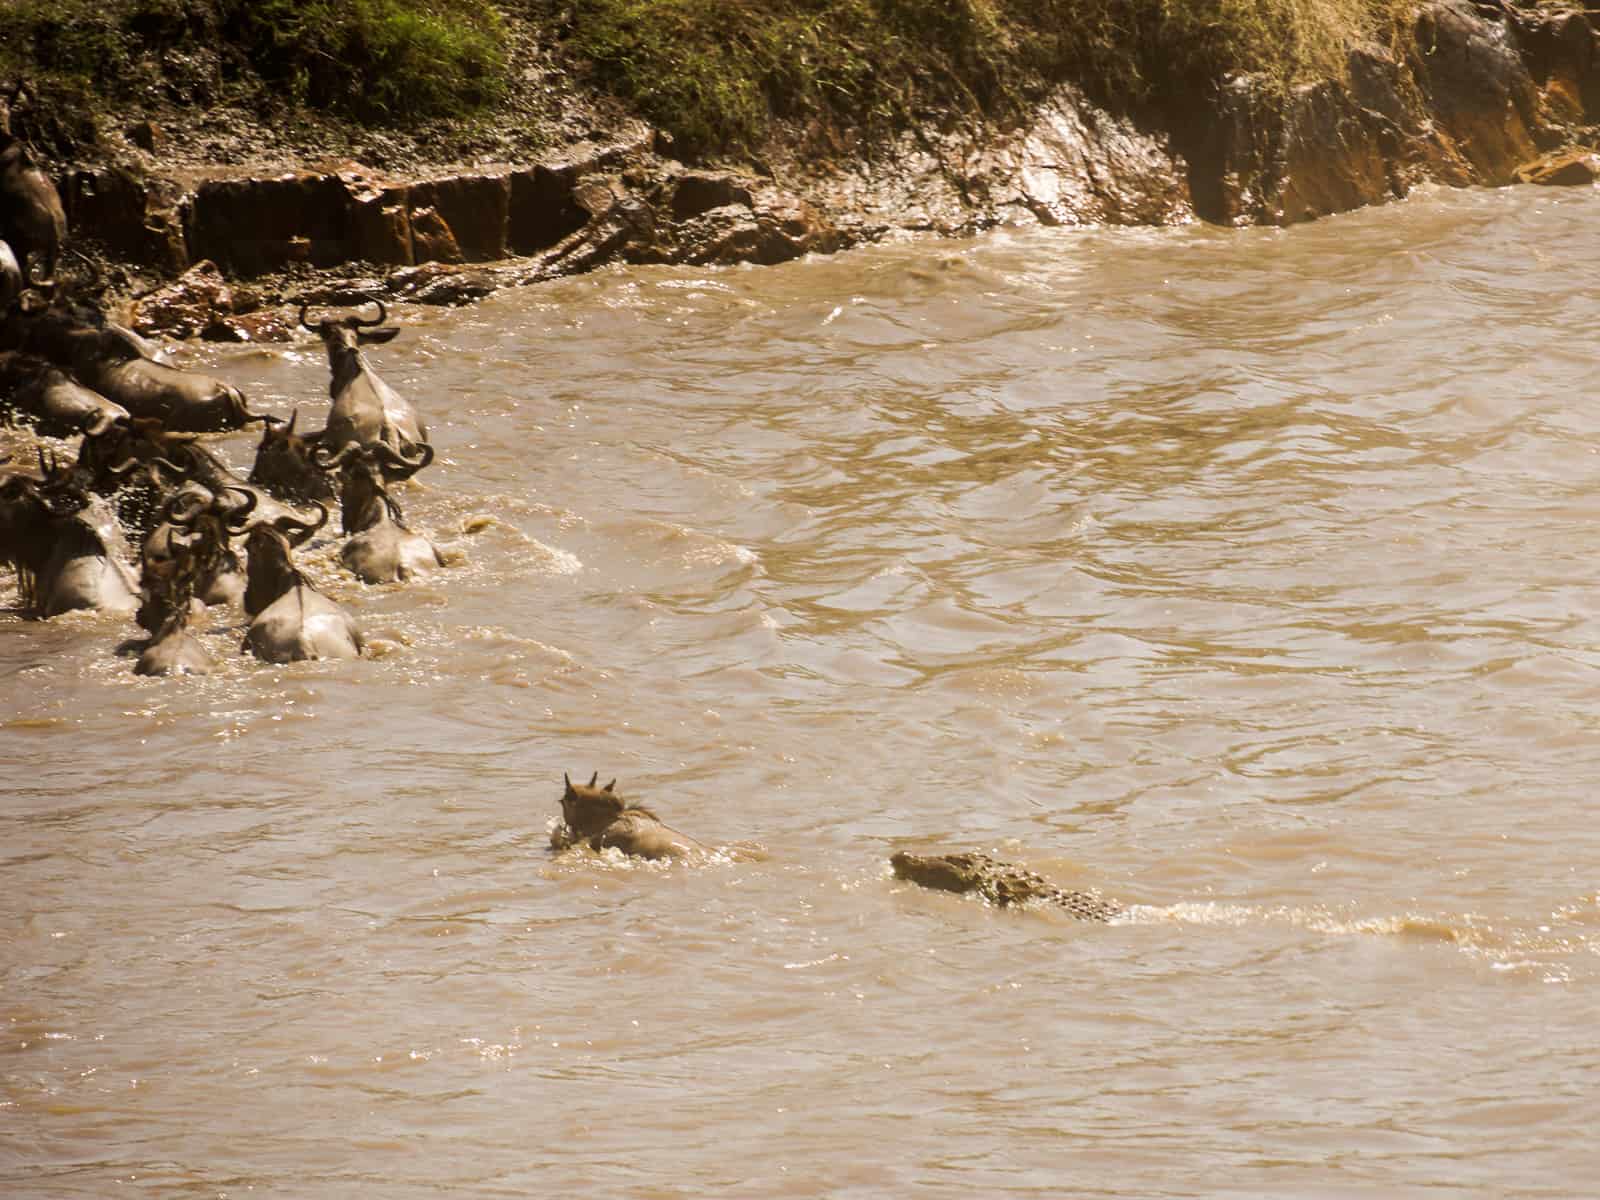 alligator mara river crossing - tanzania honeymoon safari guide